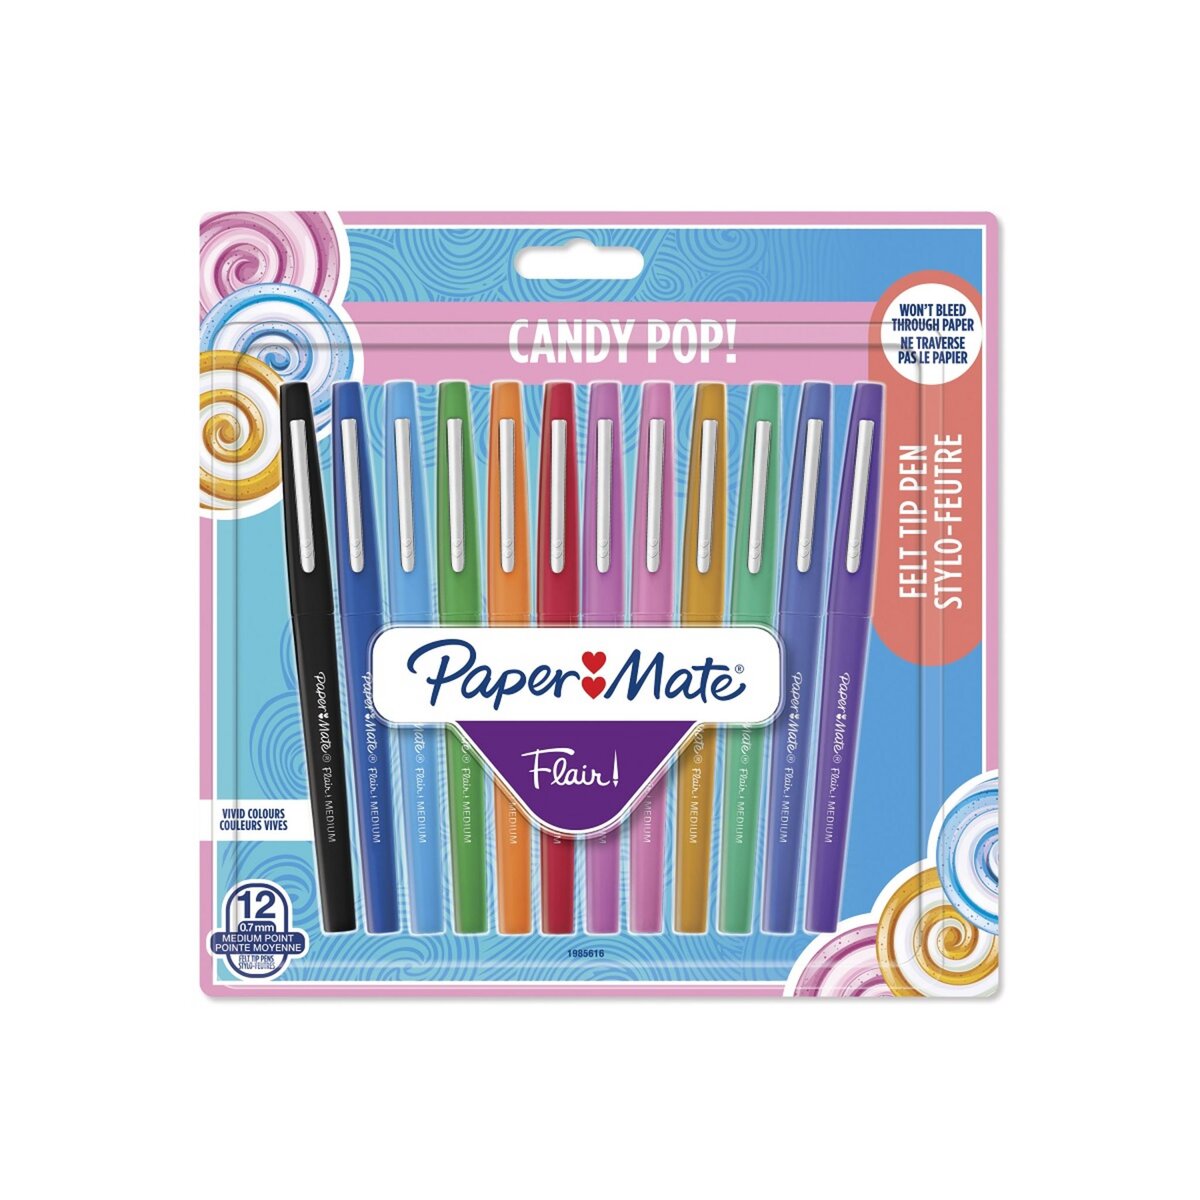 STABILO  Lot de 12 stylos feutres Flair Candy Pop assortis fun